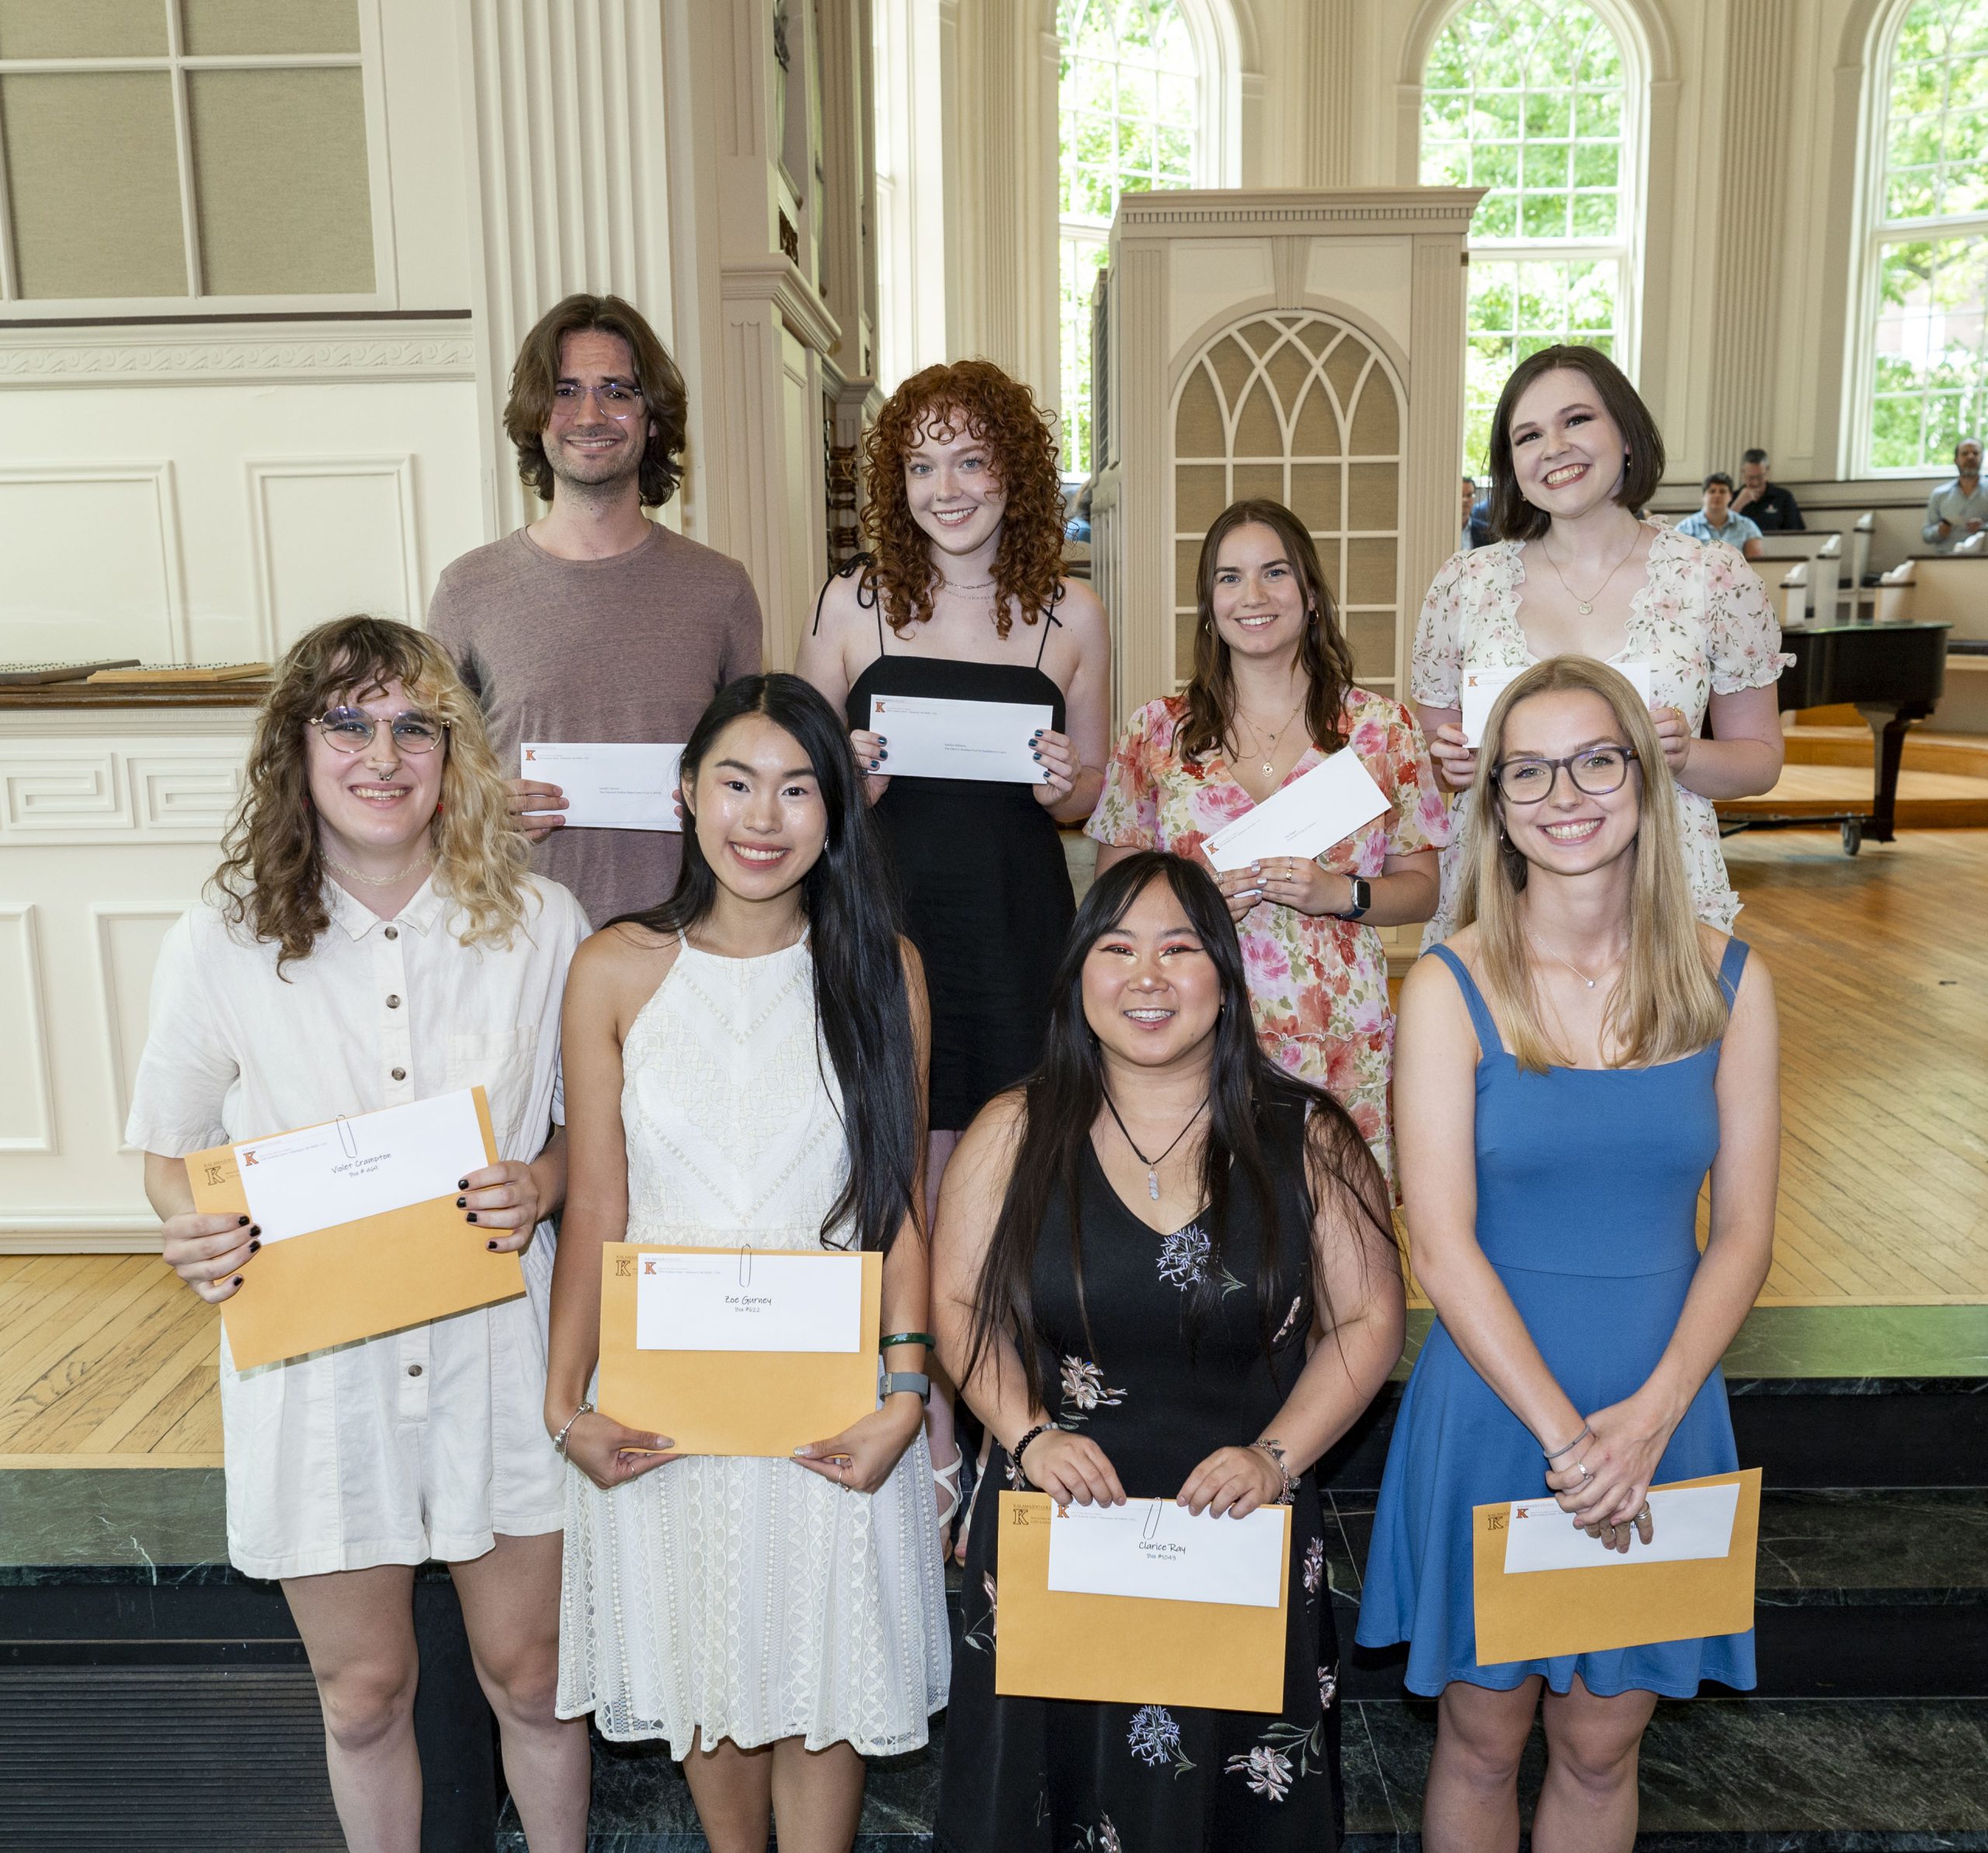 Senior Awards Ceremony Honors Students’ Achievements